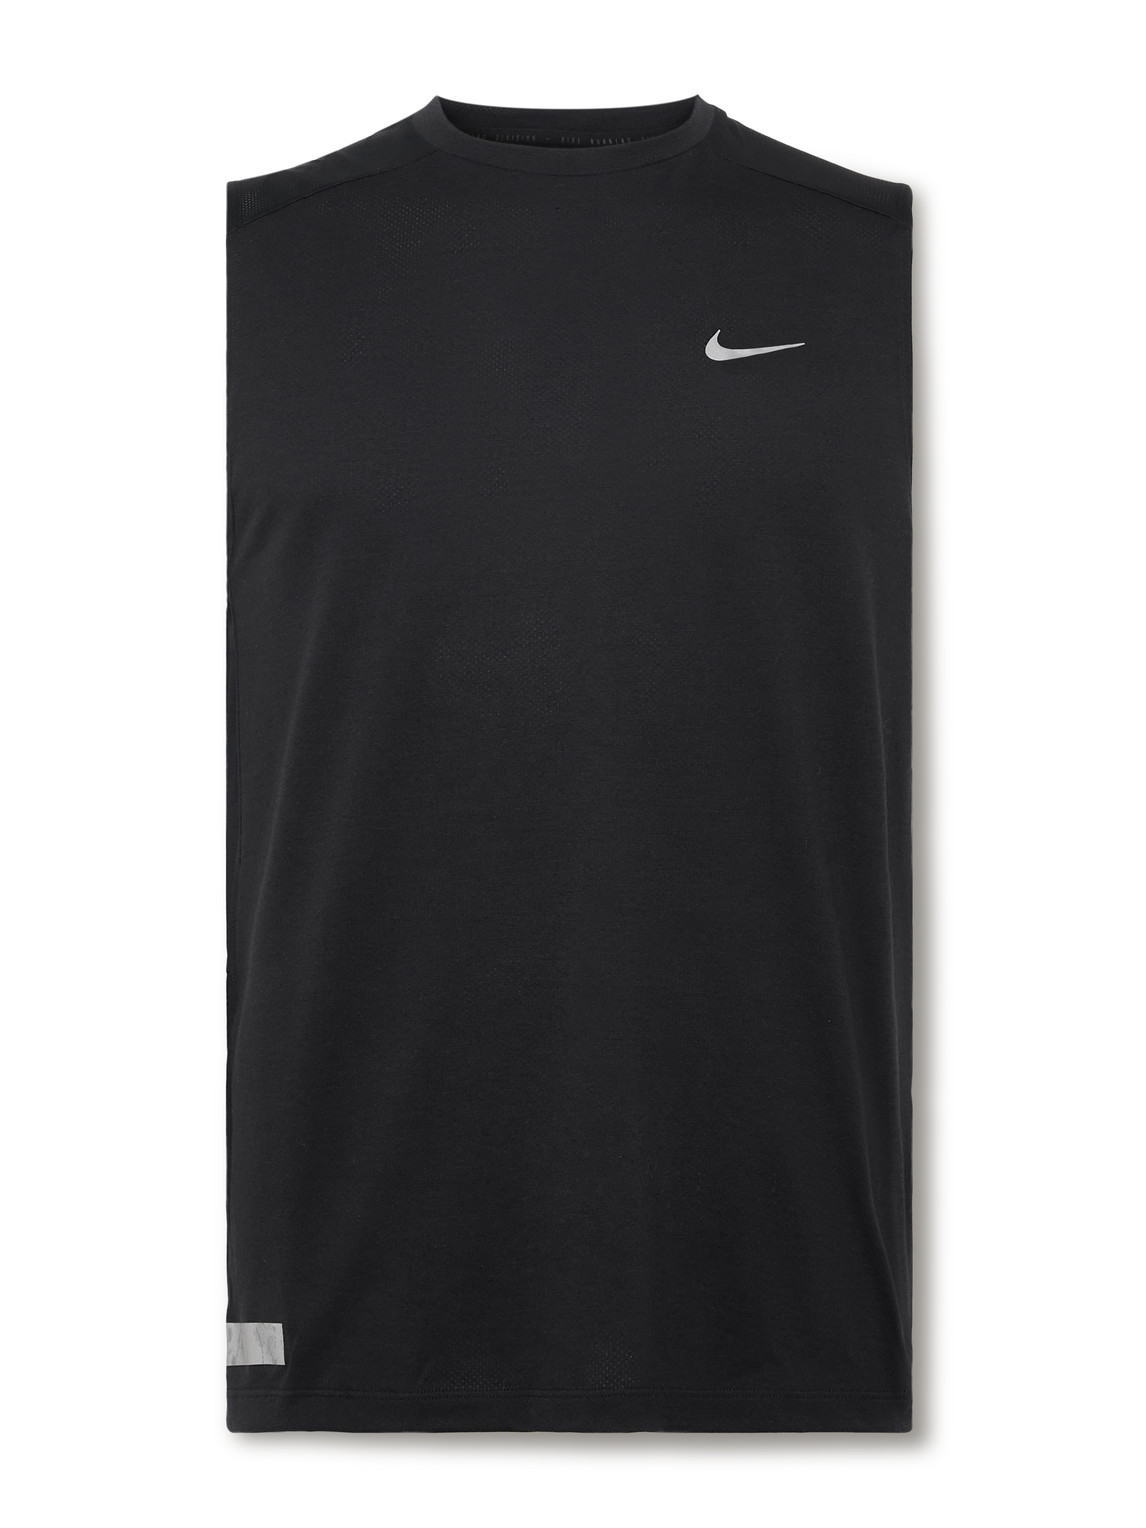 Nike Men's Dri-fit Run Division Rise 365 Running Tank Top In Black/reflective Silver